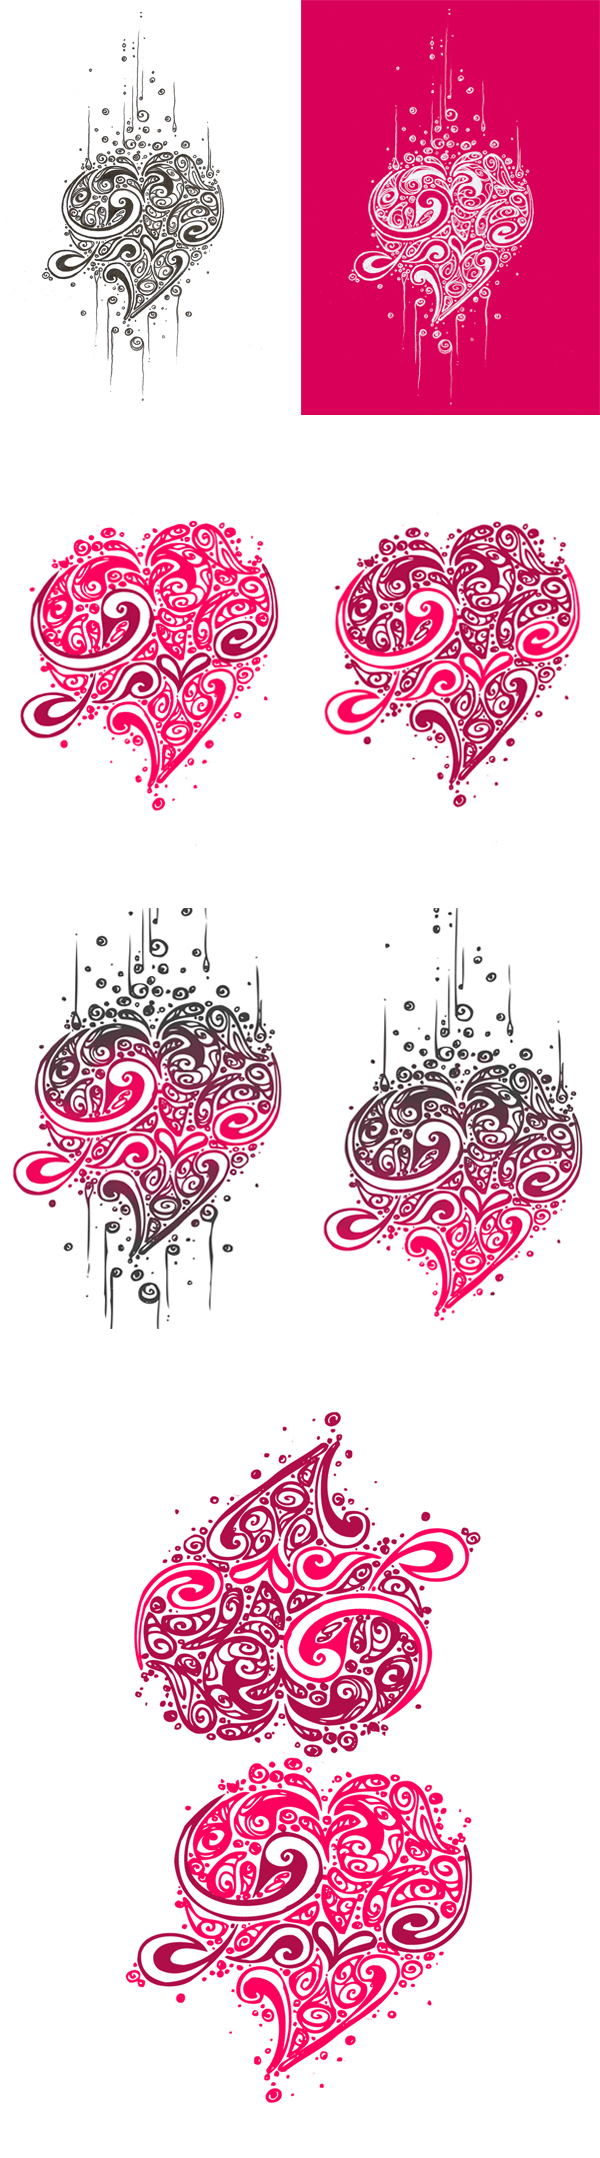 ladi ladislava ladania fricova bohacova valentines heart Love card valentine greeting affection type pink red